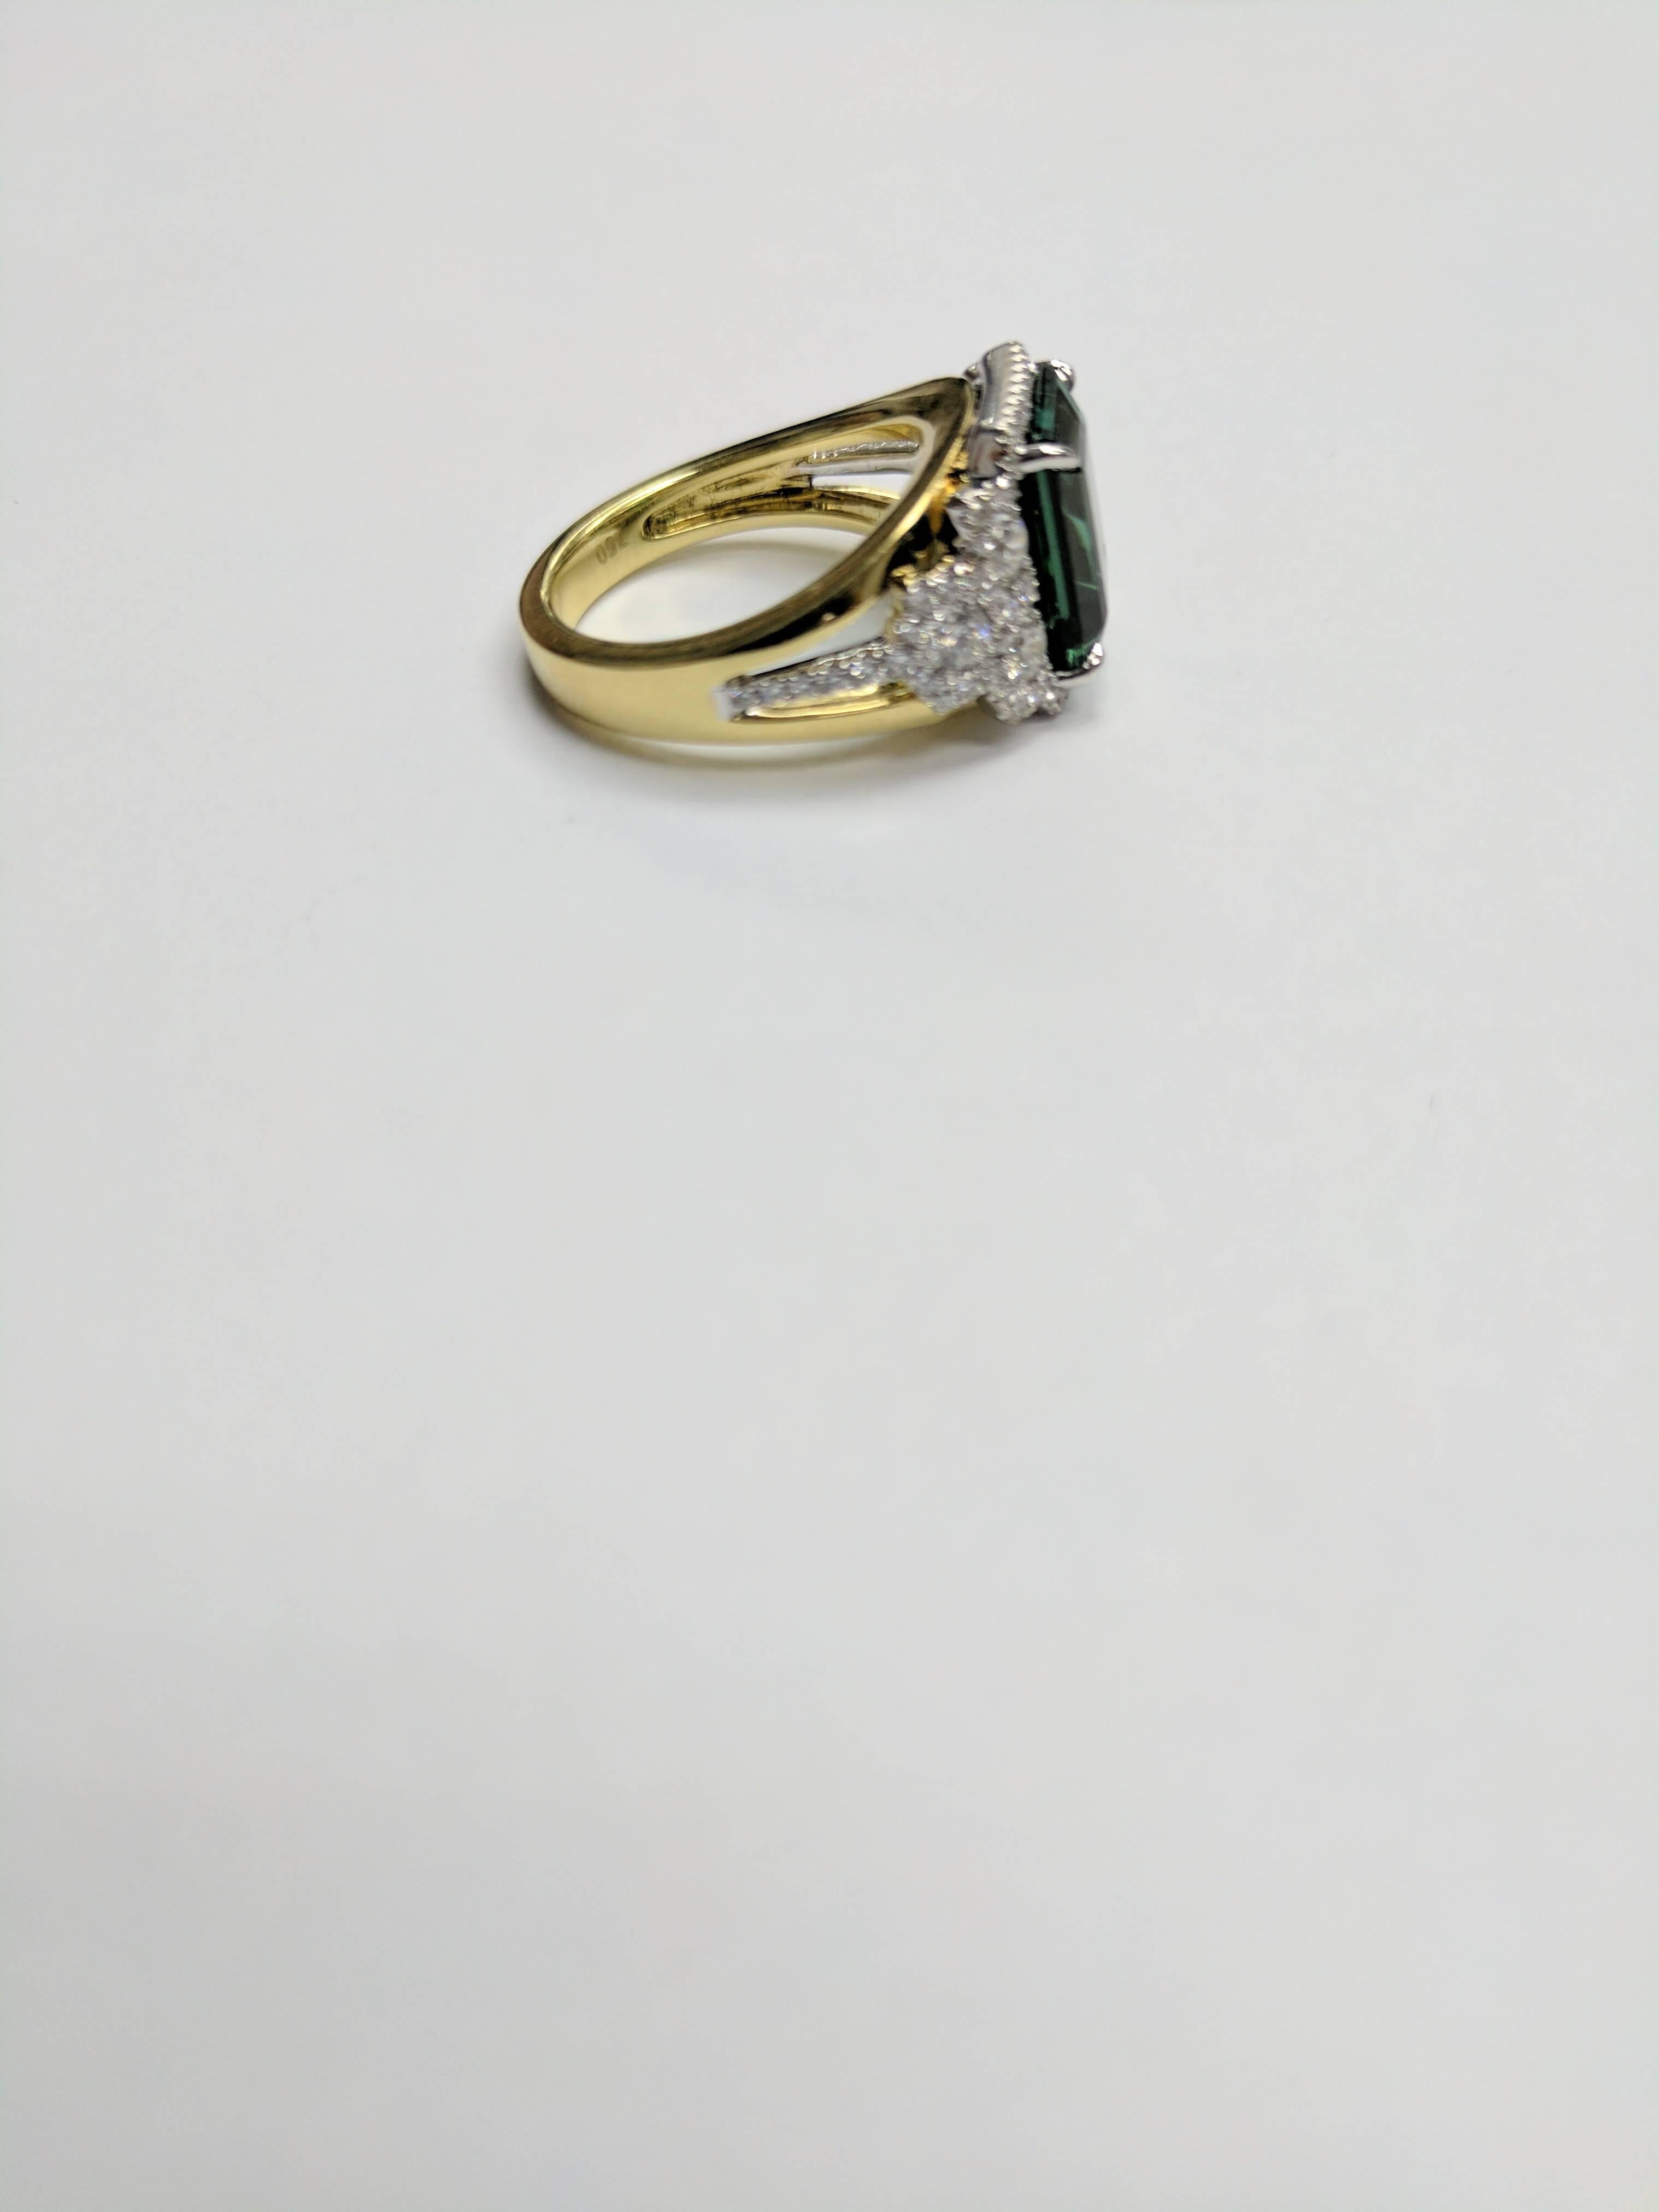 Frederic Sage 4.88 Carat Fine Green Tourmaline Diamond Ring For Sale 1